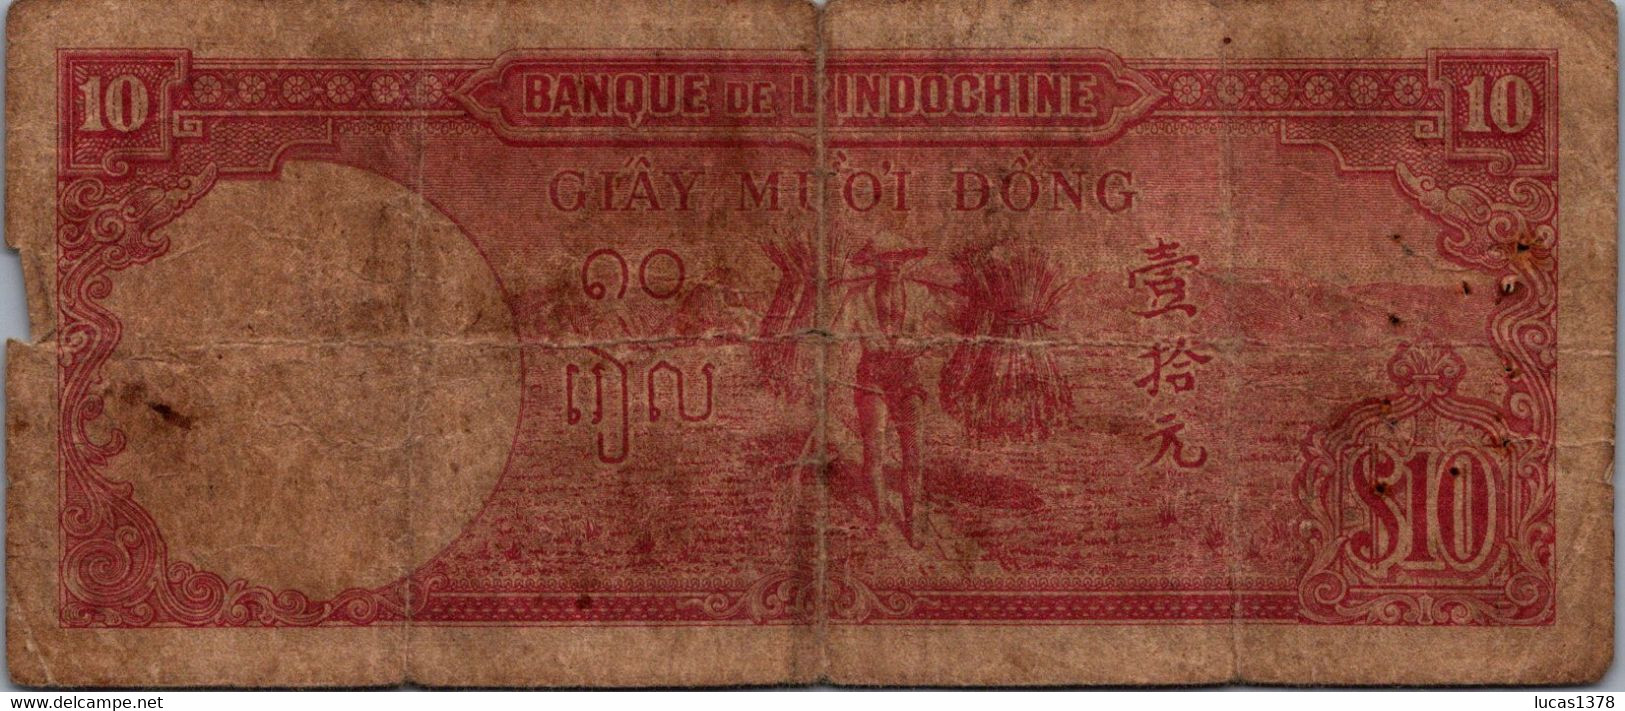 INDOCHINE 10 PIASTRES 1947.1951 / 1 SEULE LETTRE AVANT NUMERO / RARE - Indochina